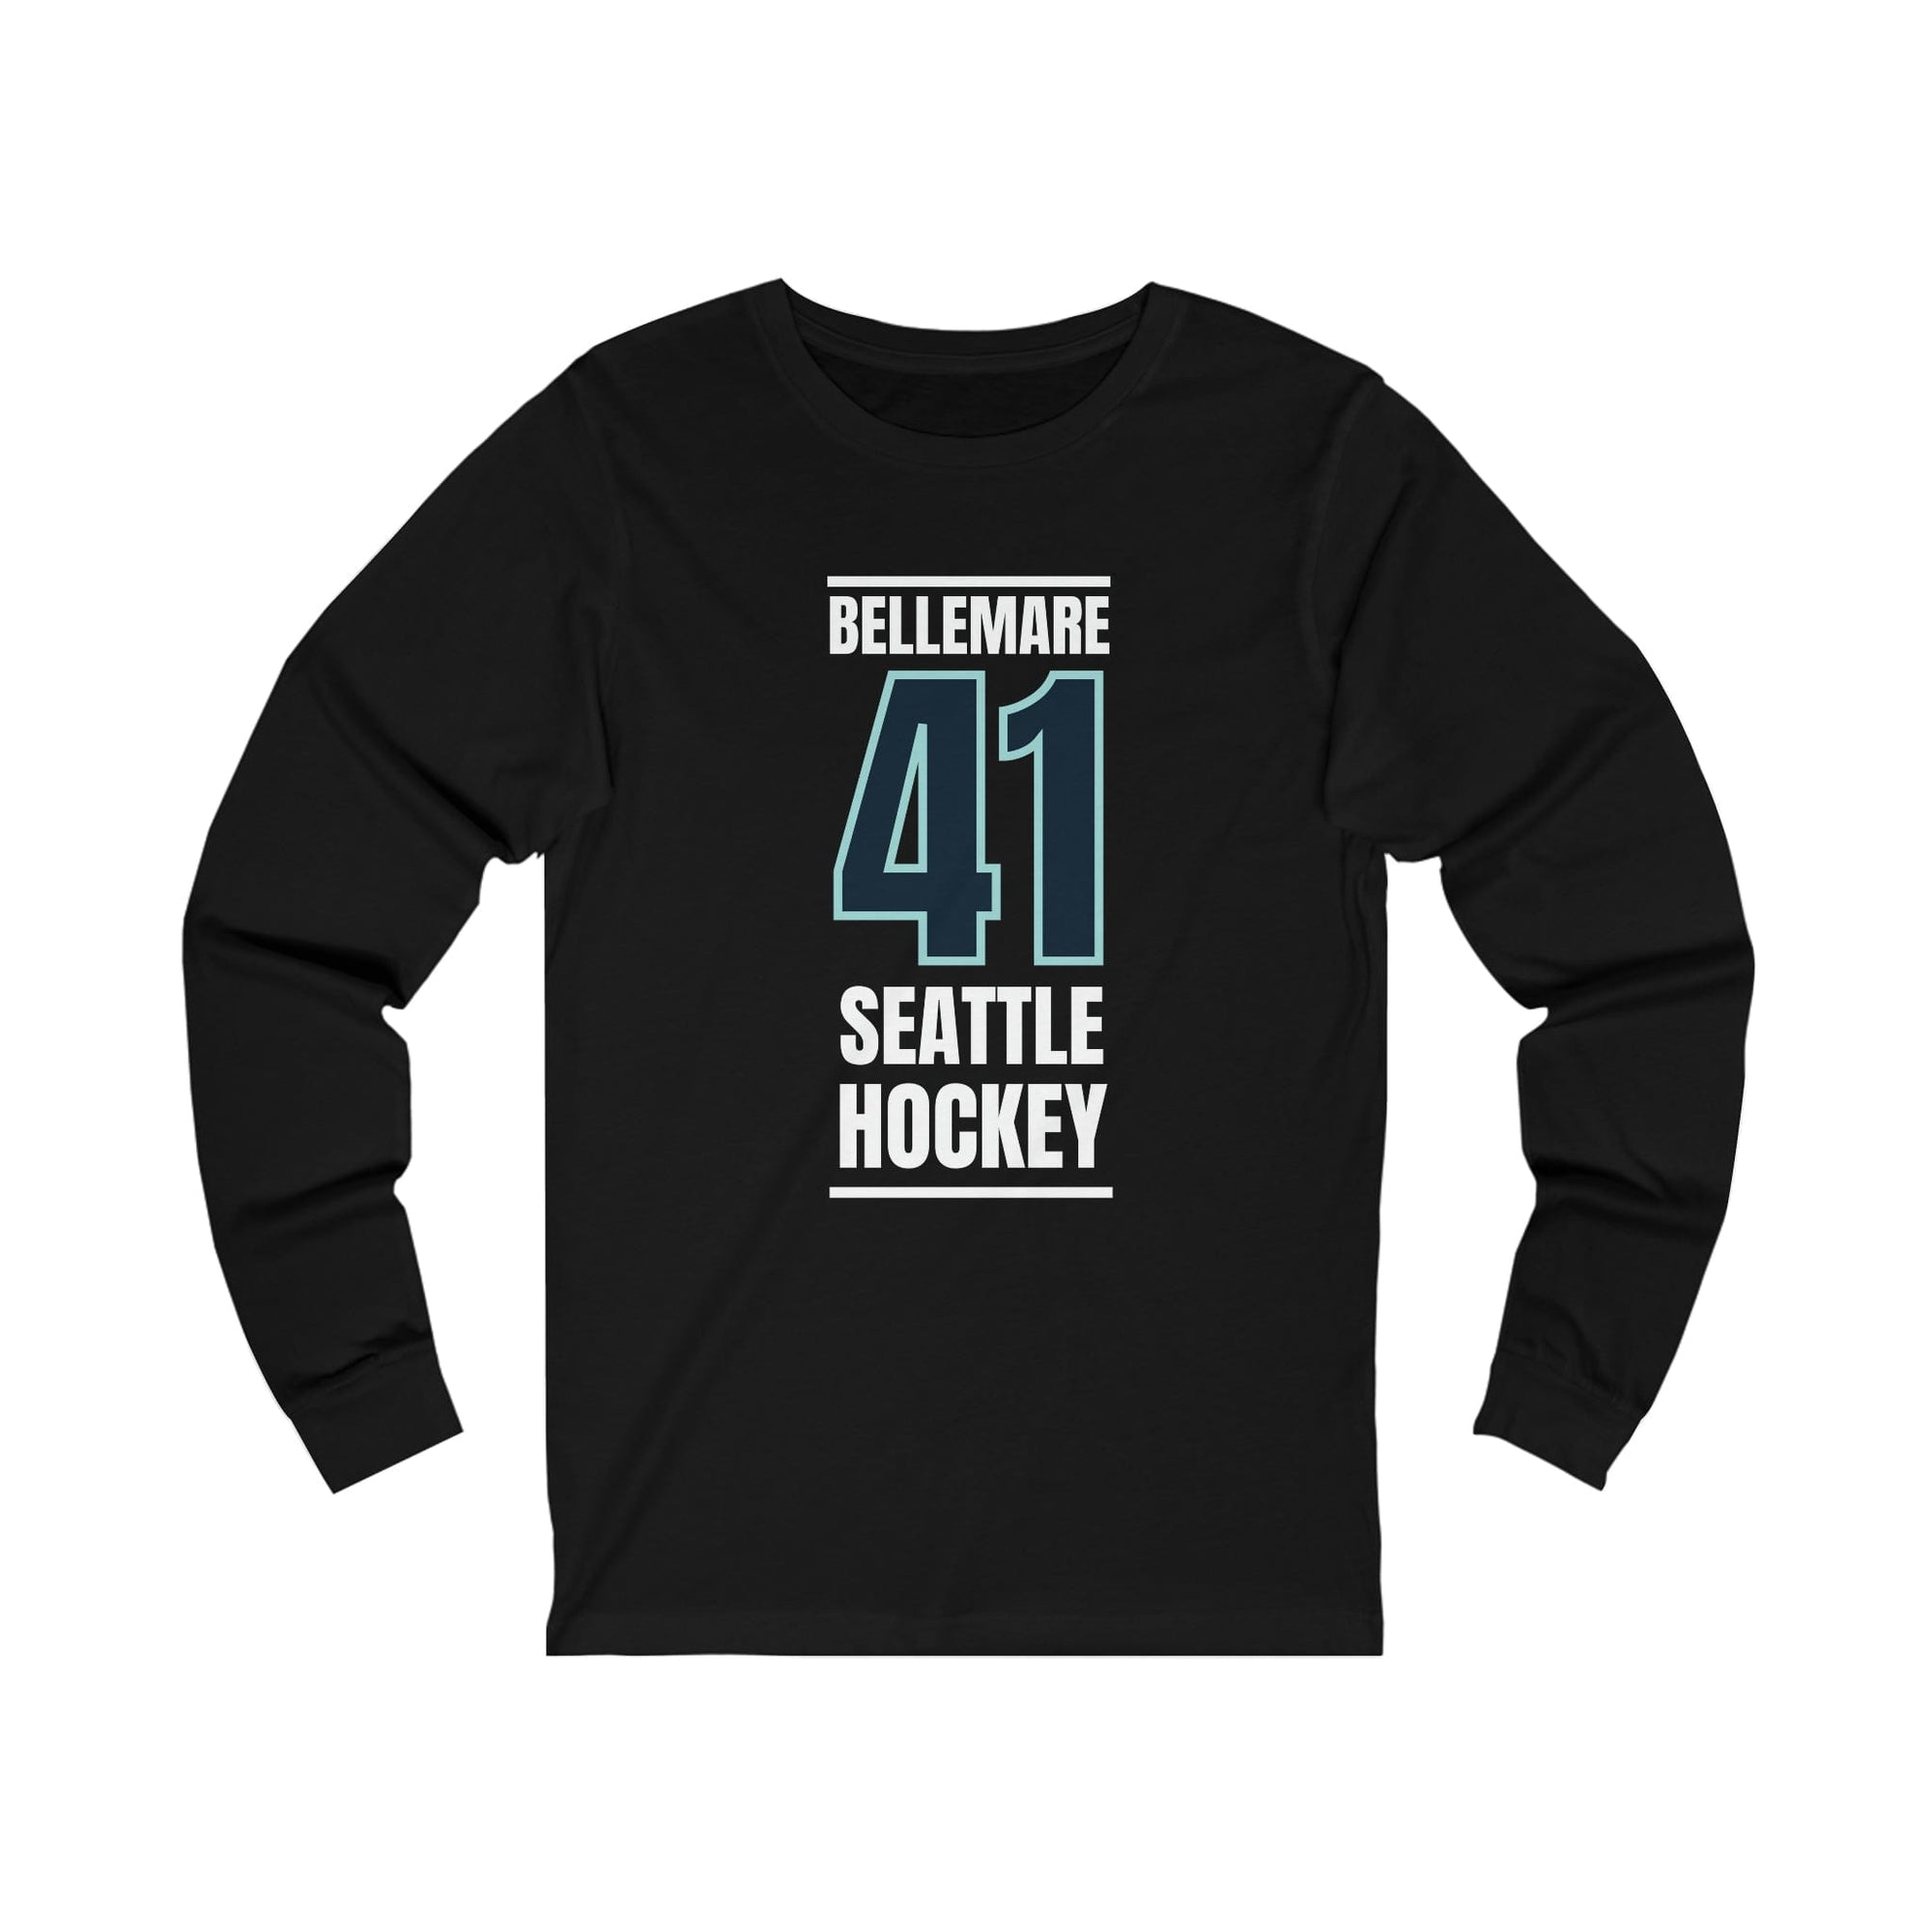 Long-sleeve Bellemare 41 Seattle Hockey Black Vertical Design Unisex Jersey Long Sleeve Shirt